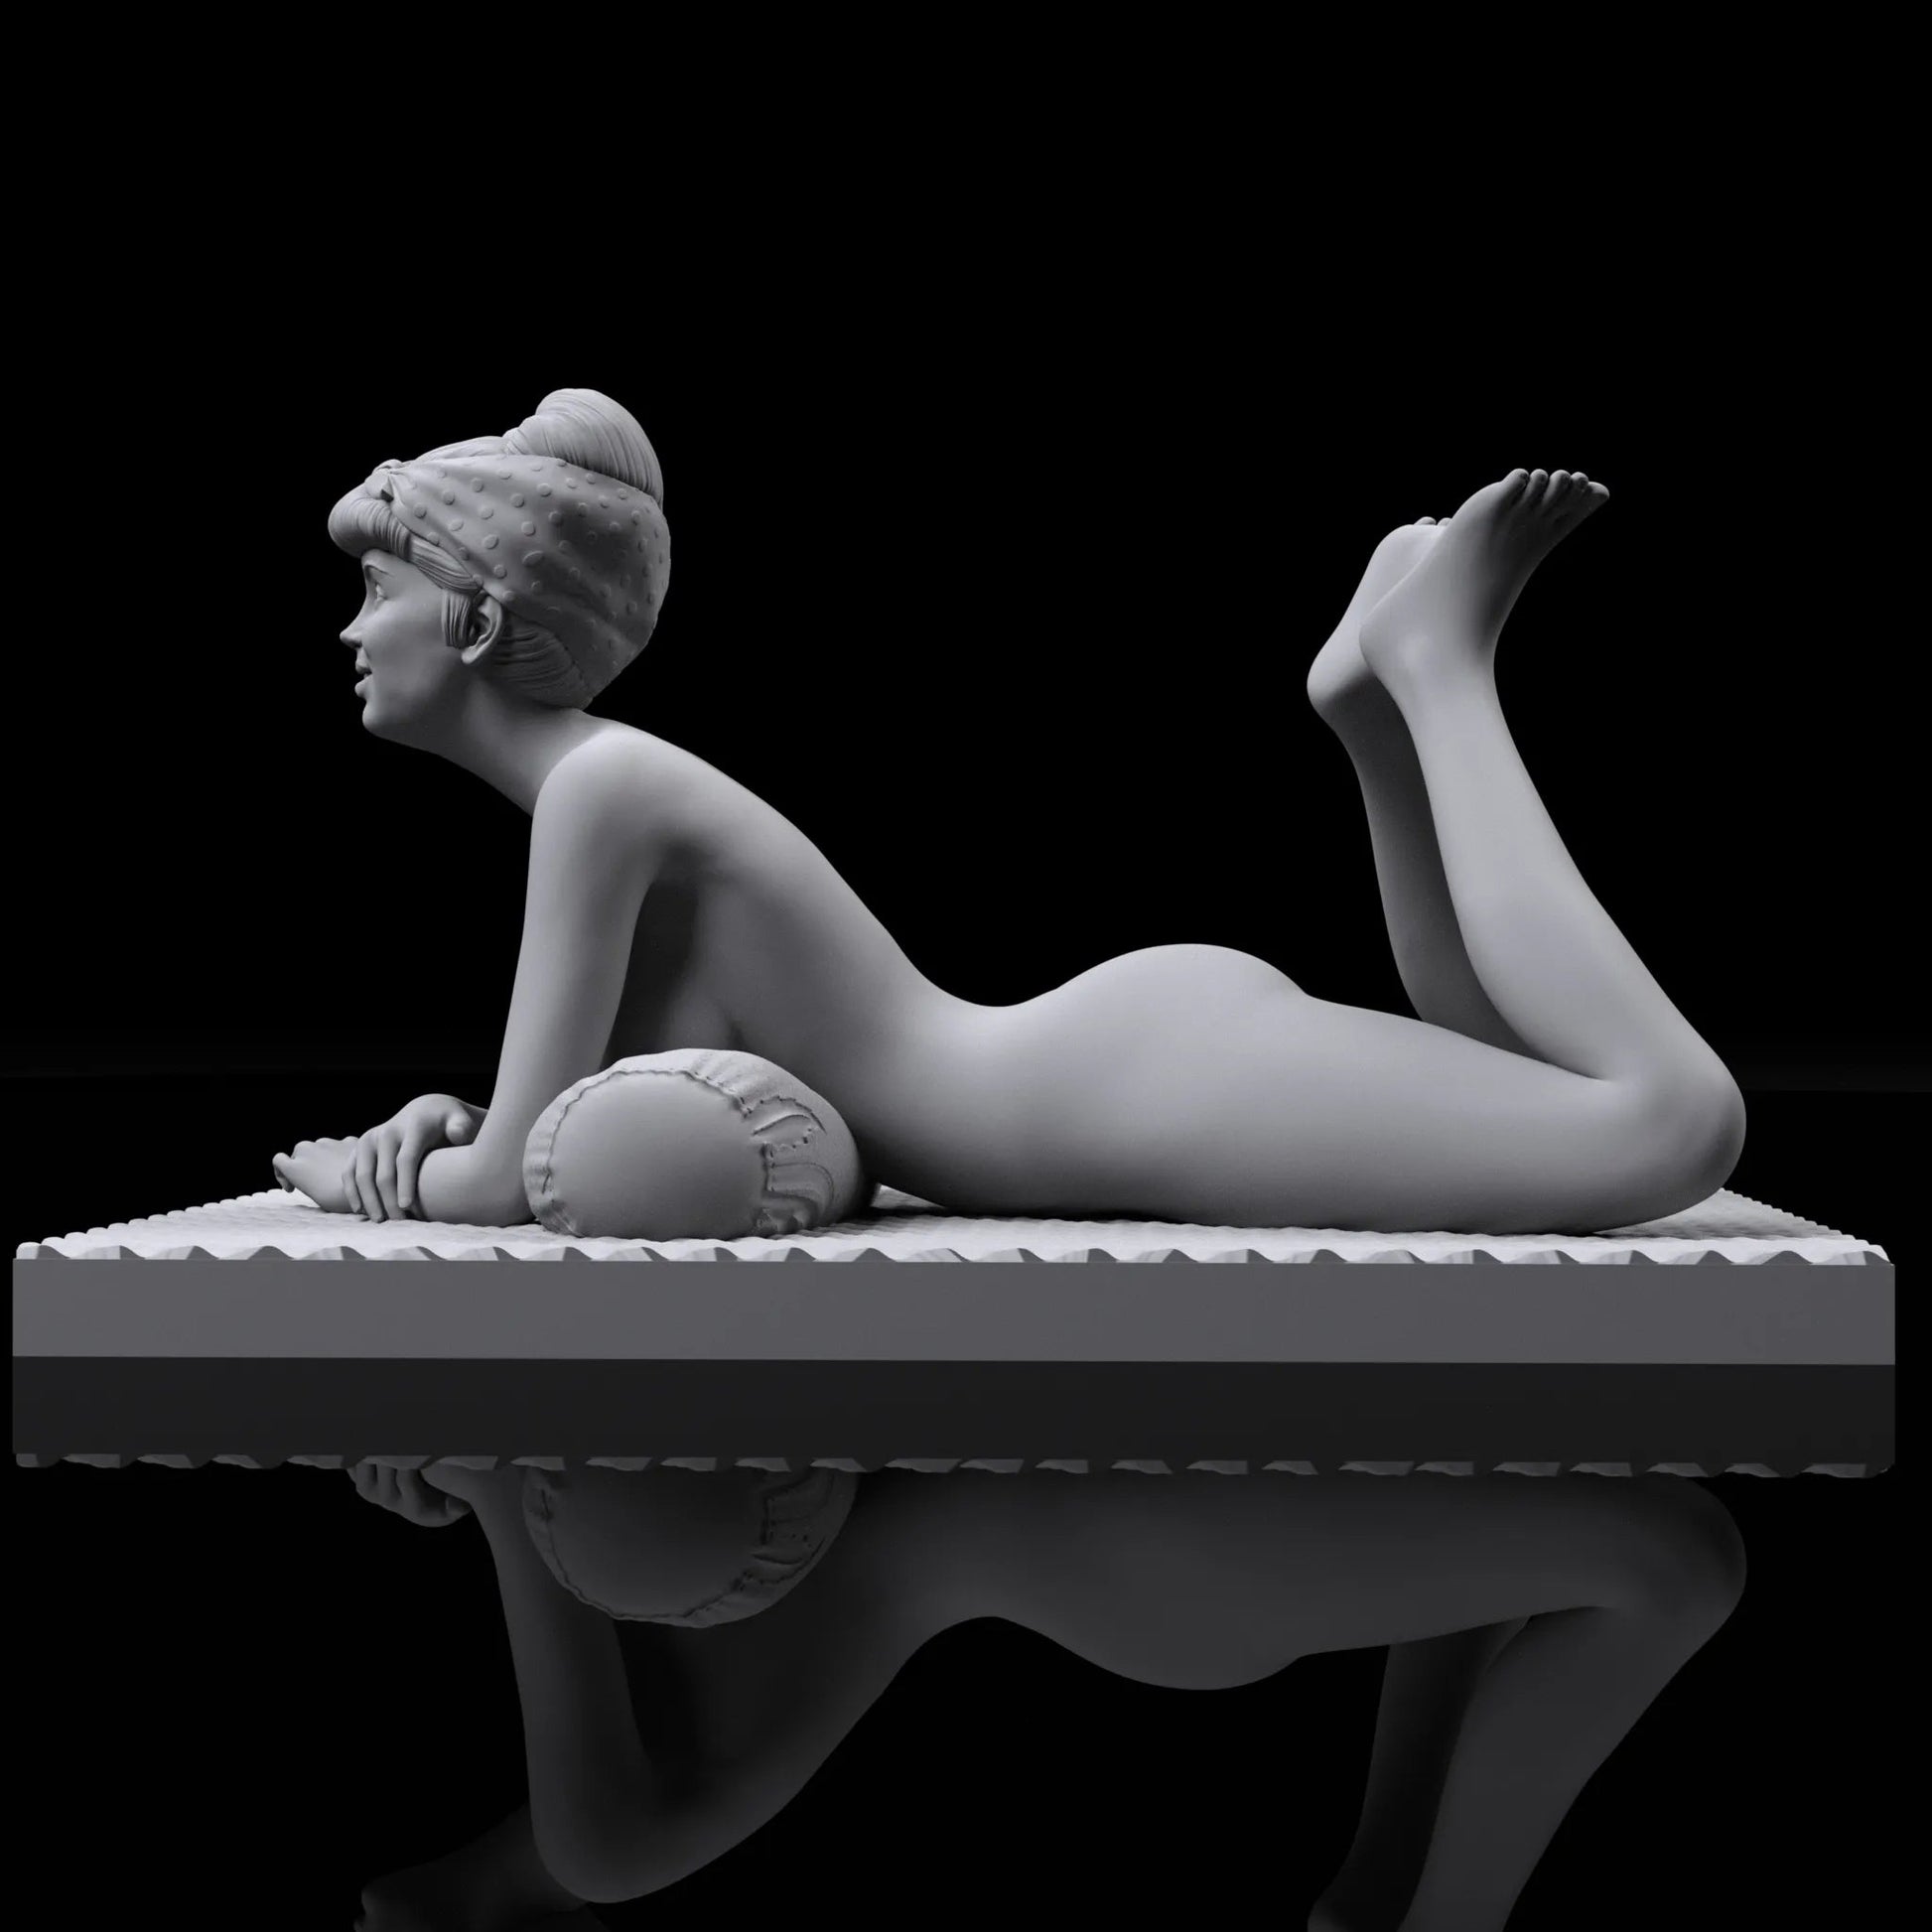 Retro Girl | 3D Printed | Fanart | Unpainted | NSFW Version | Figurine | Figure | Miniature | Sexy |